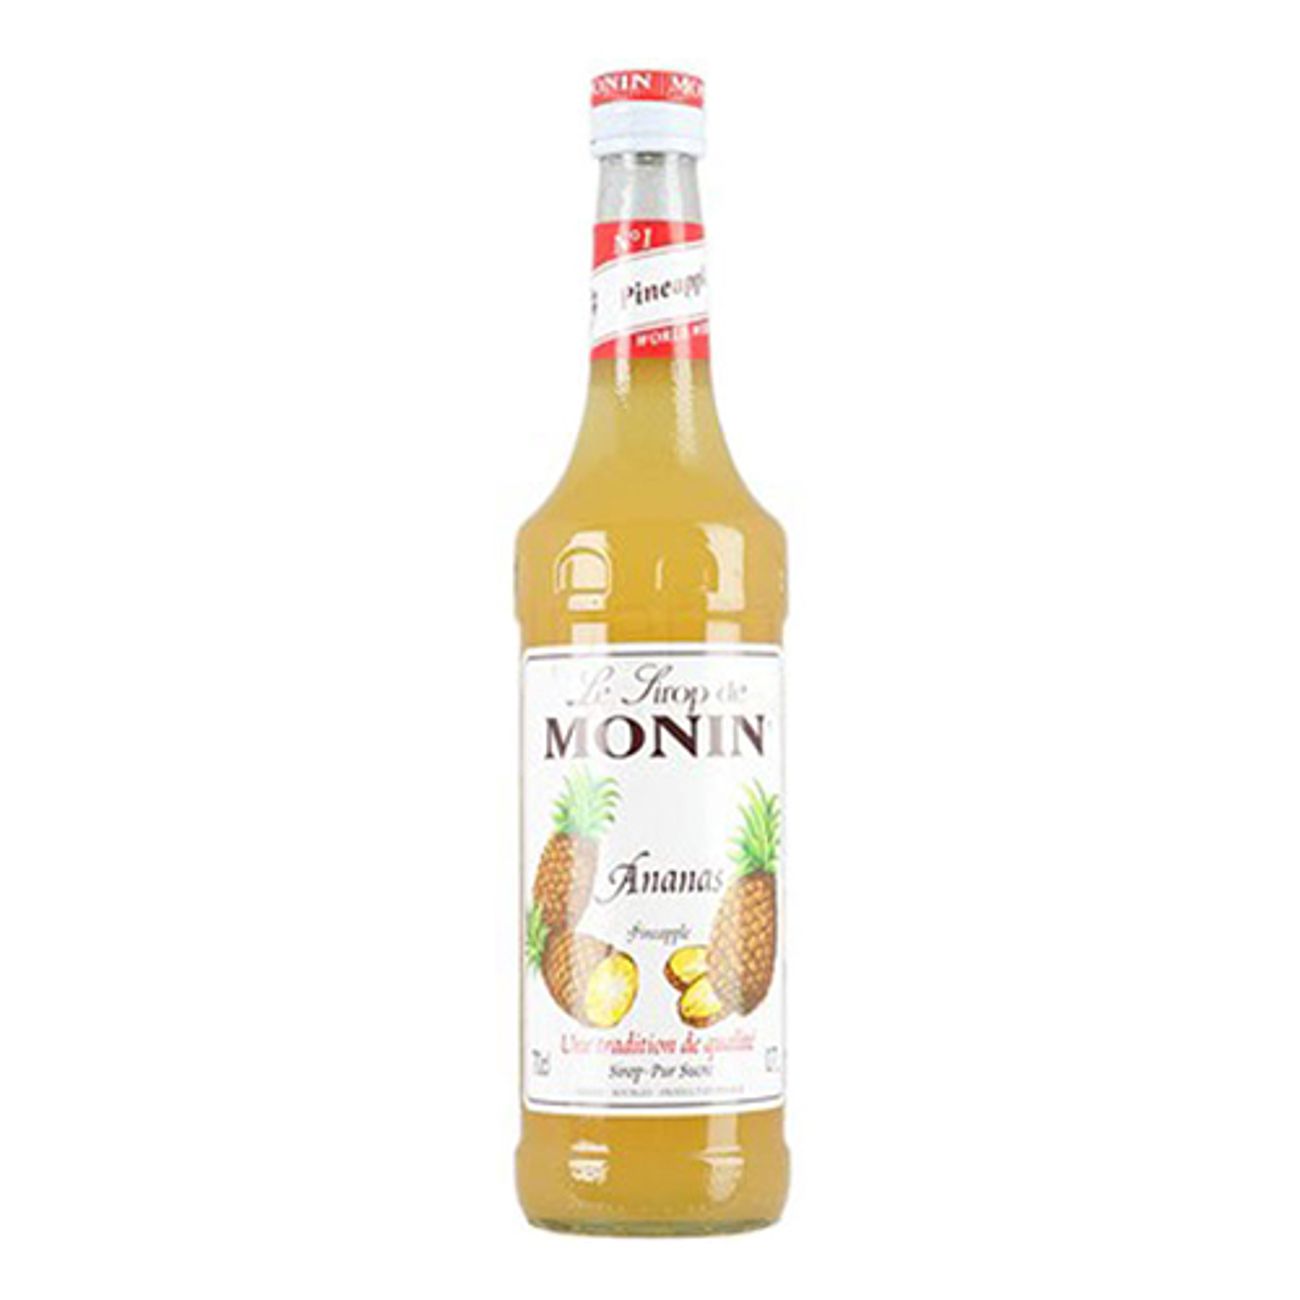 monin-ananas-drinkmix-1